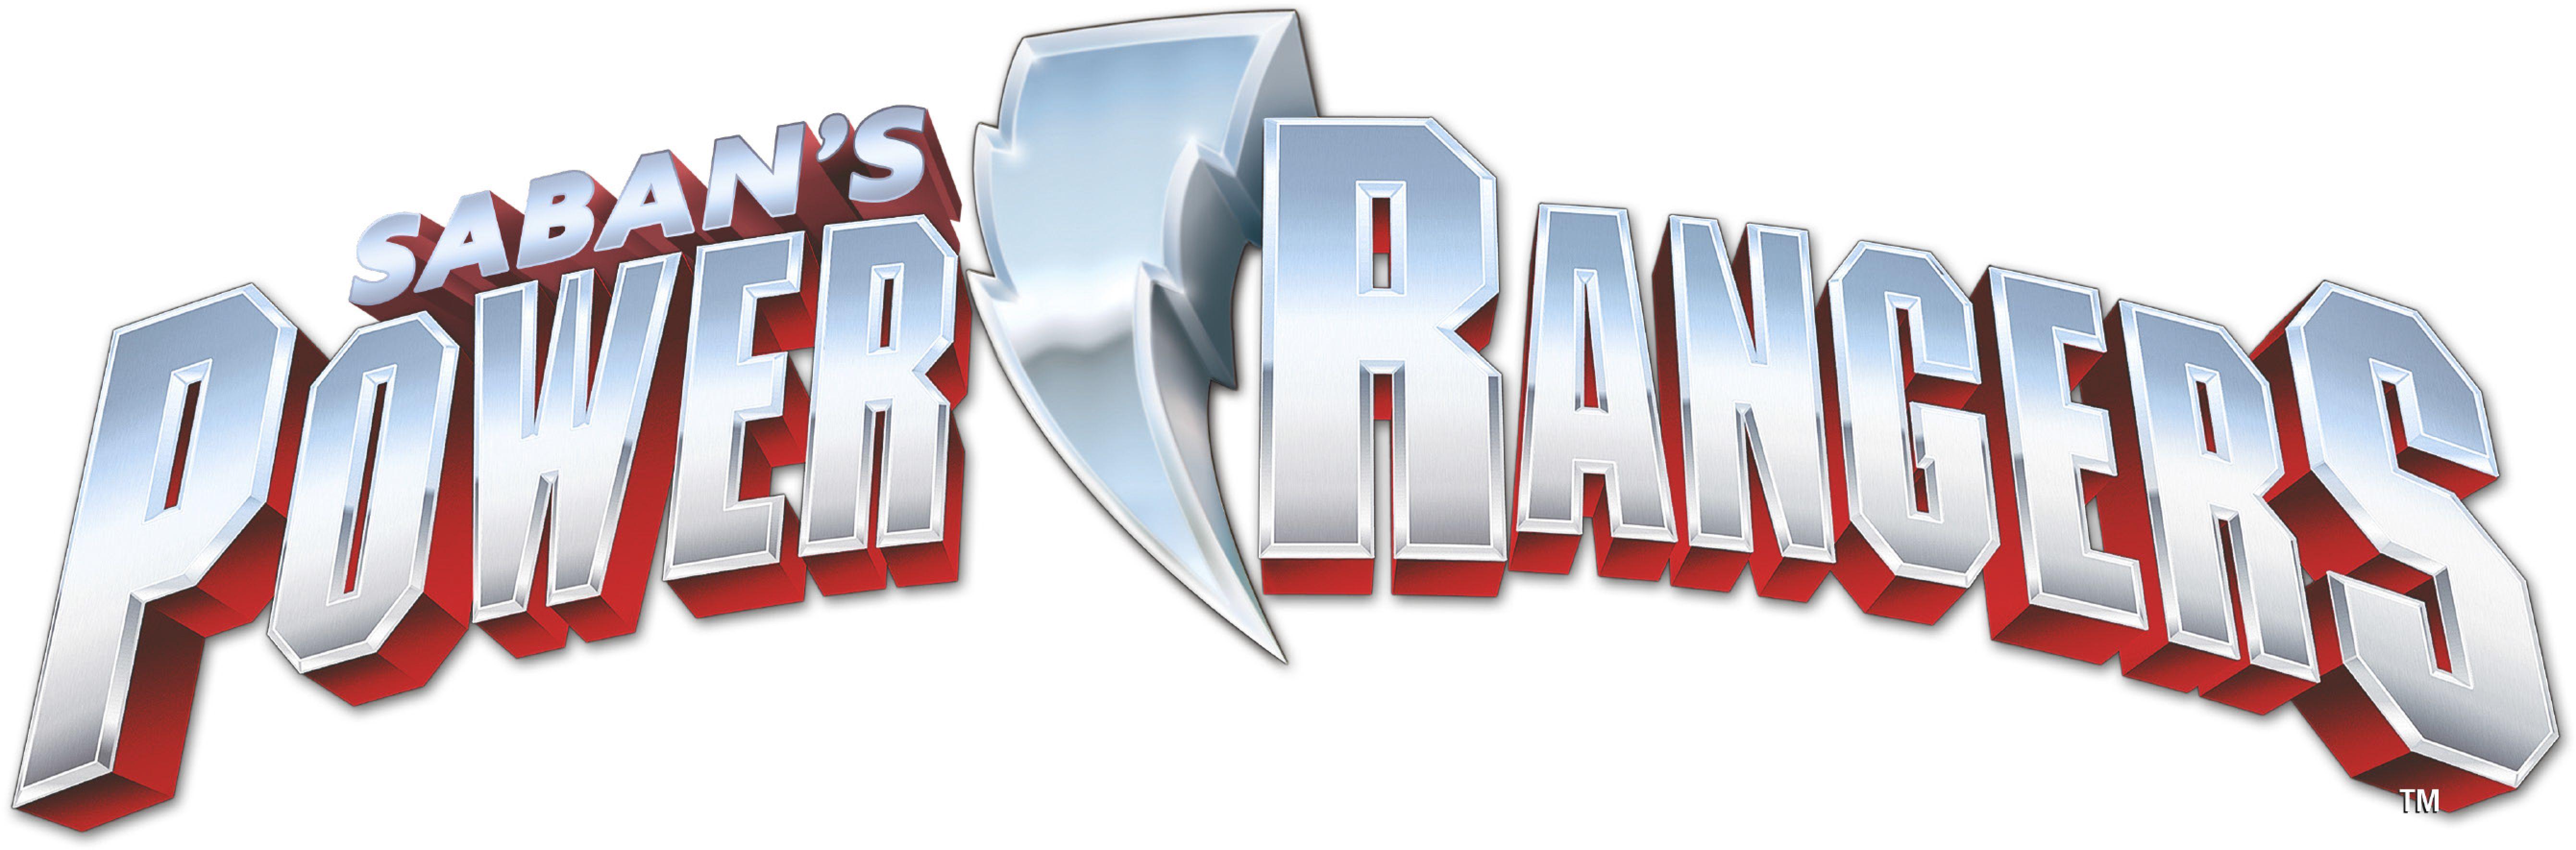 Saban Logo - Kidscreen » Archive » Dubai to host inaugural live Power Rangers ...